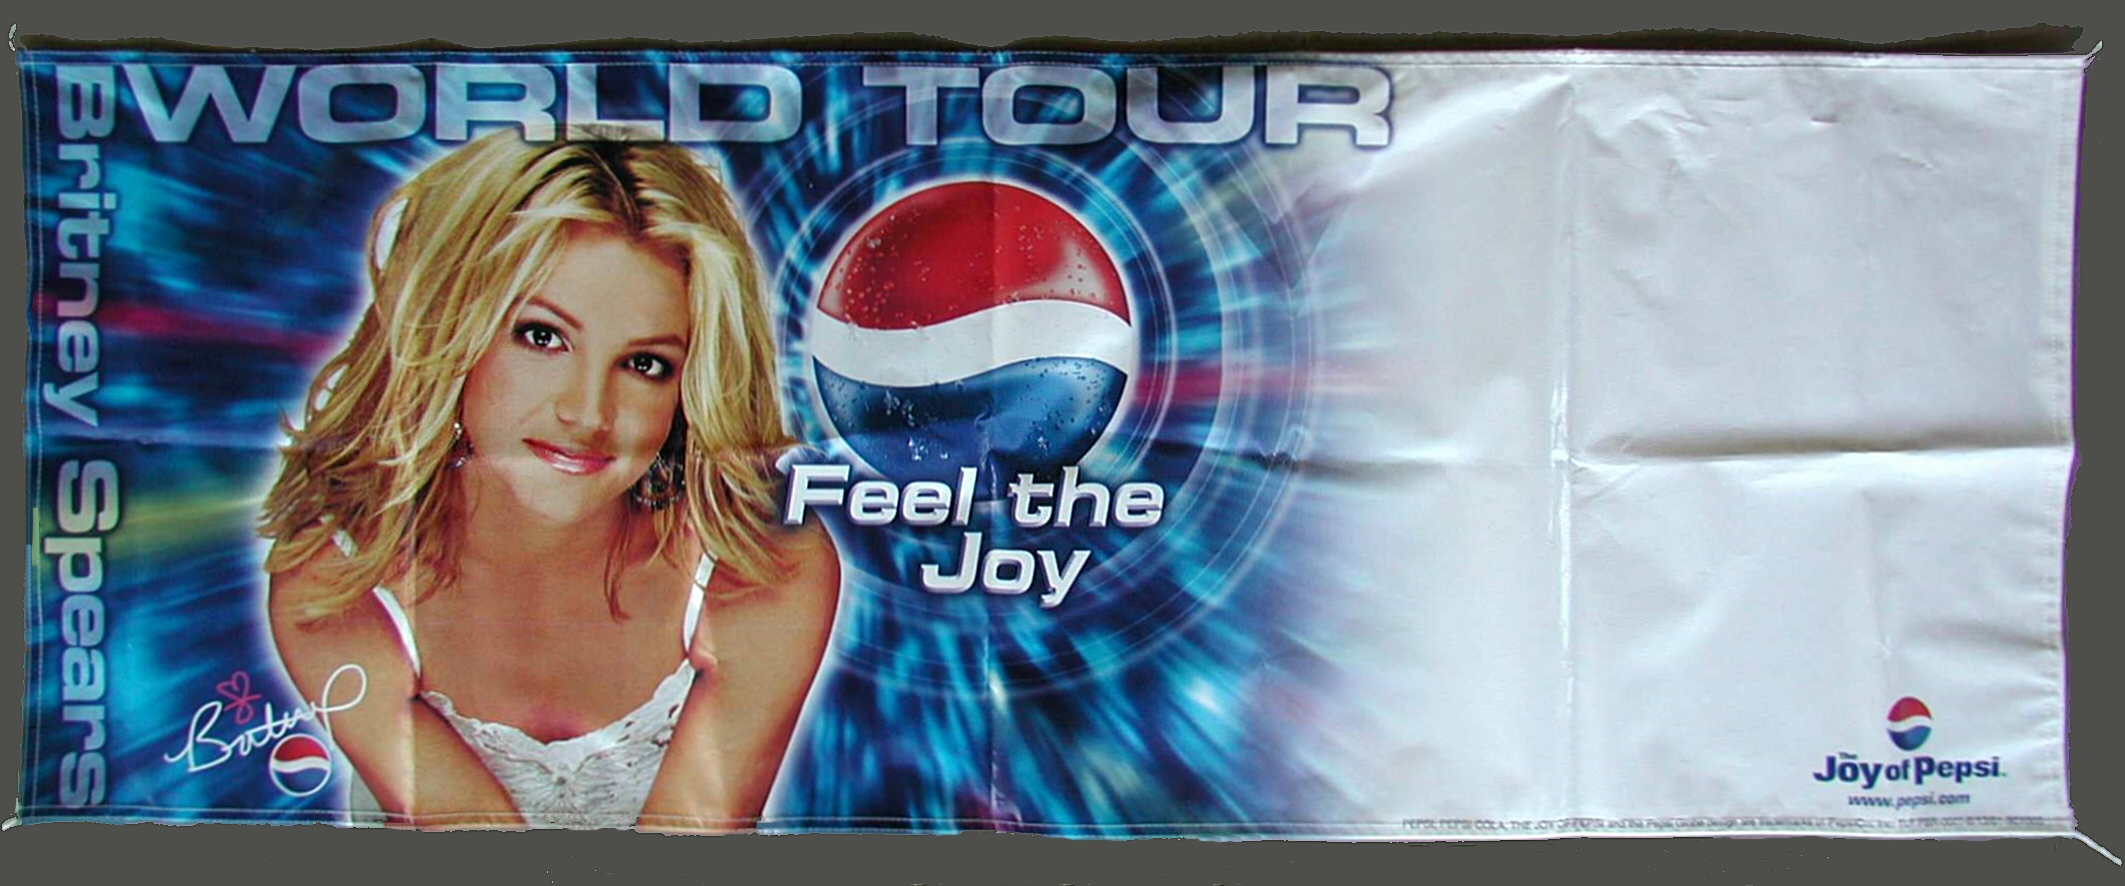 Britney pepsi poster